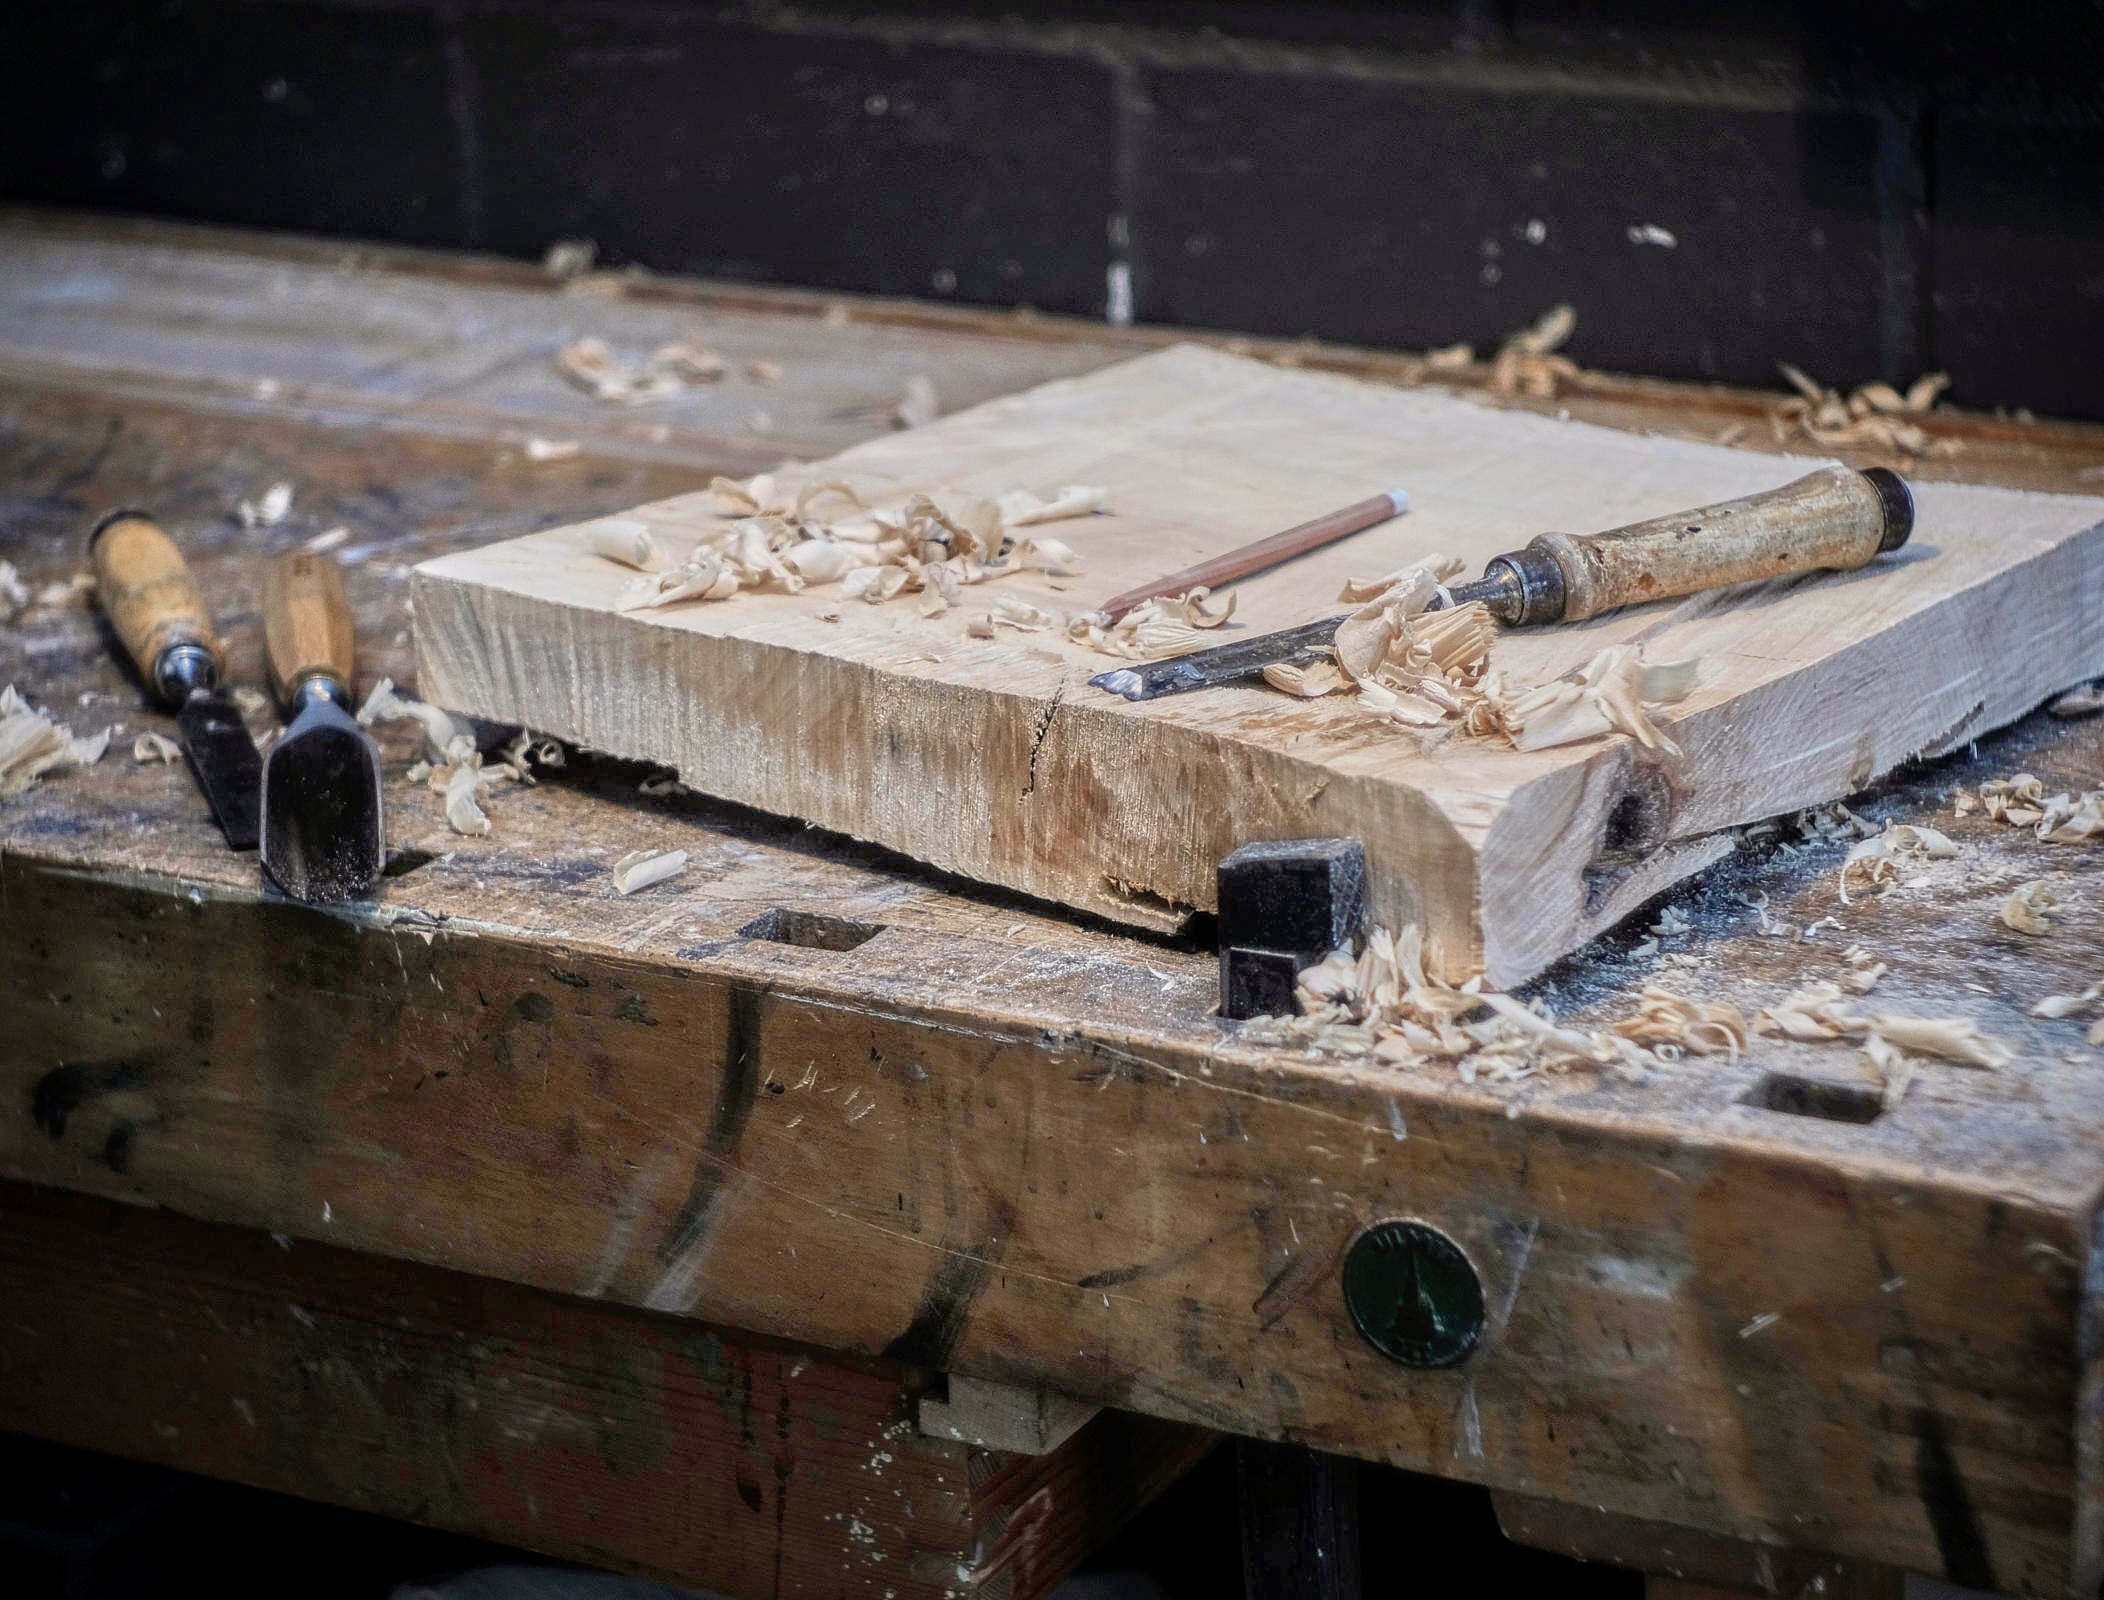 A piece of limewood being prepared for a sculpture by Fabian Ewert